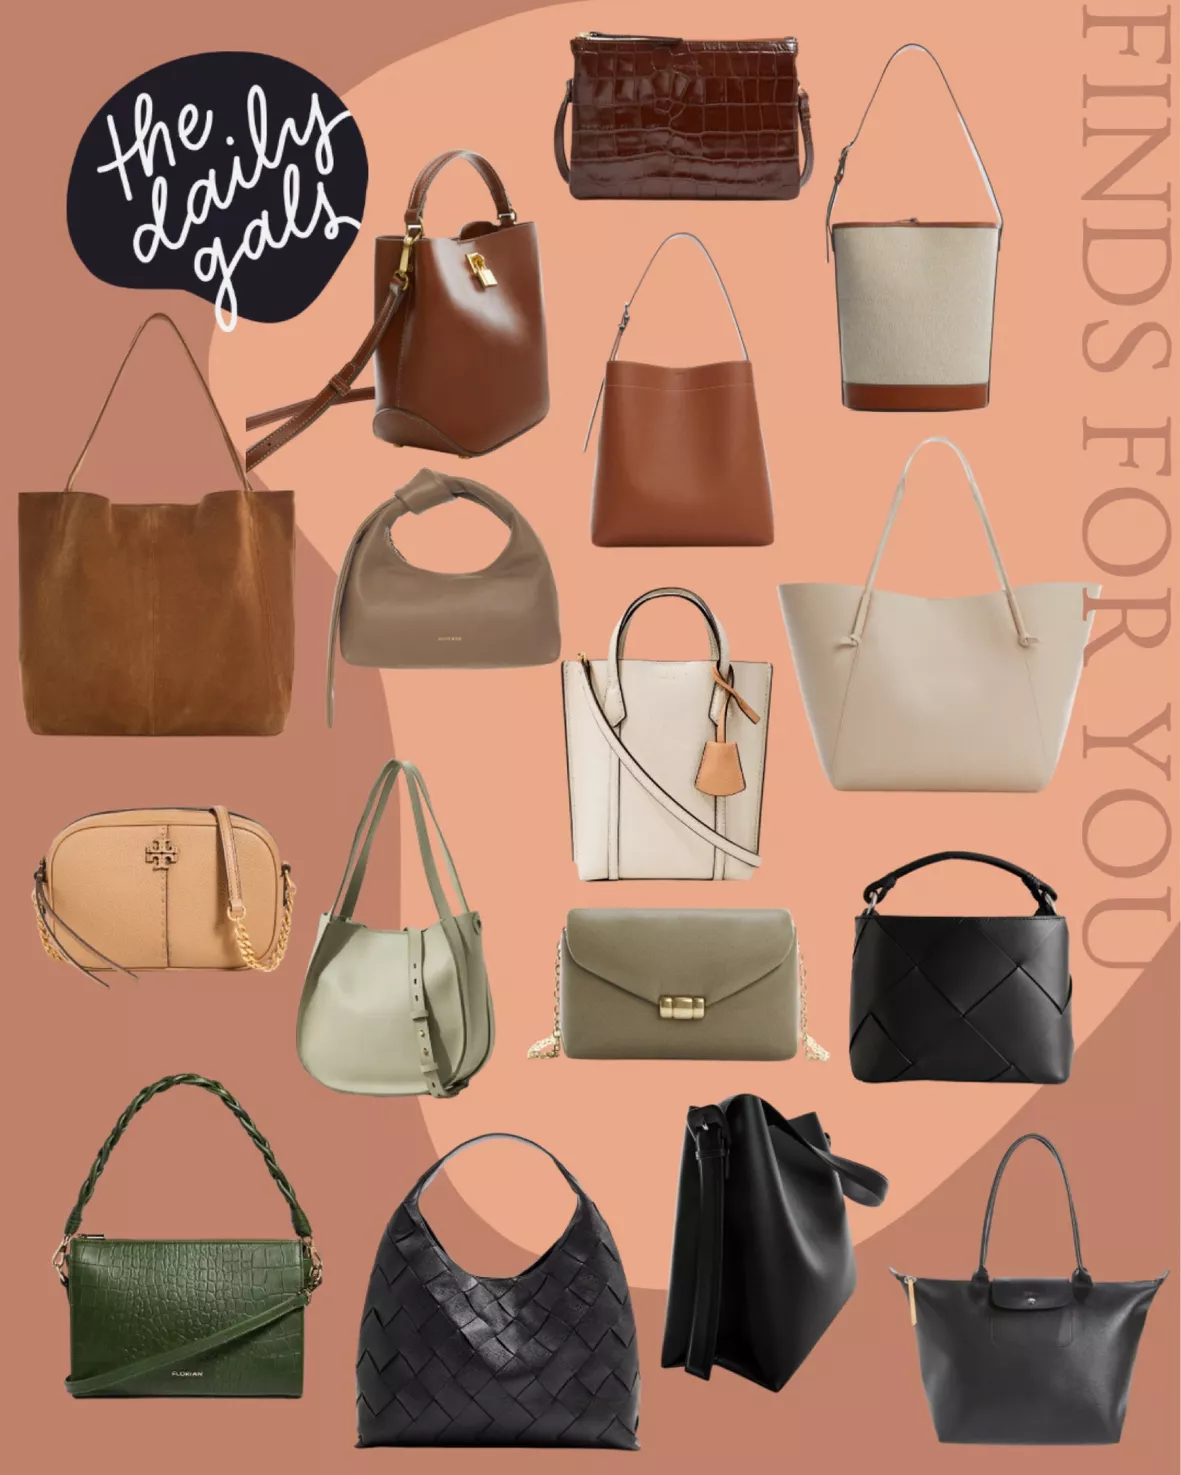 Grace Mini leather shoulder bag curated on LTK